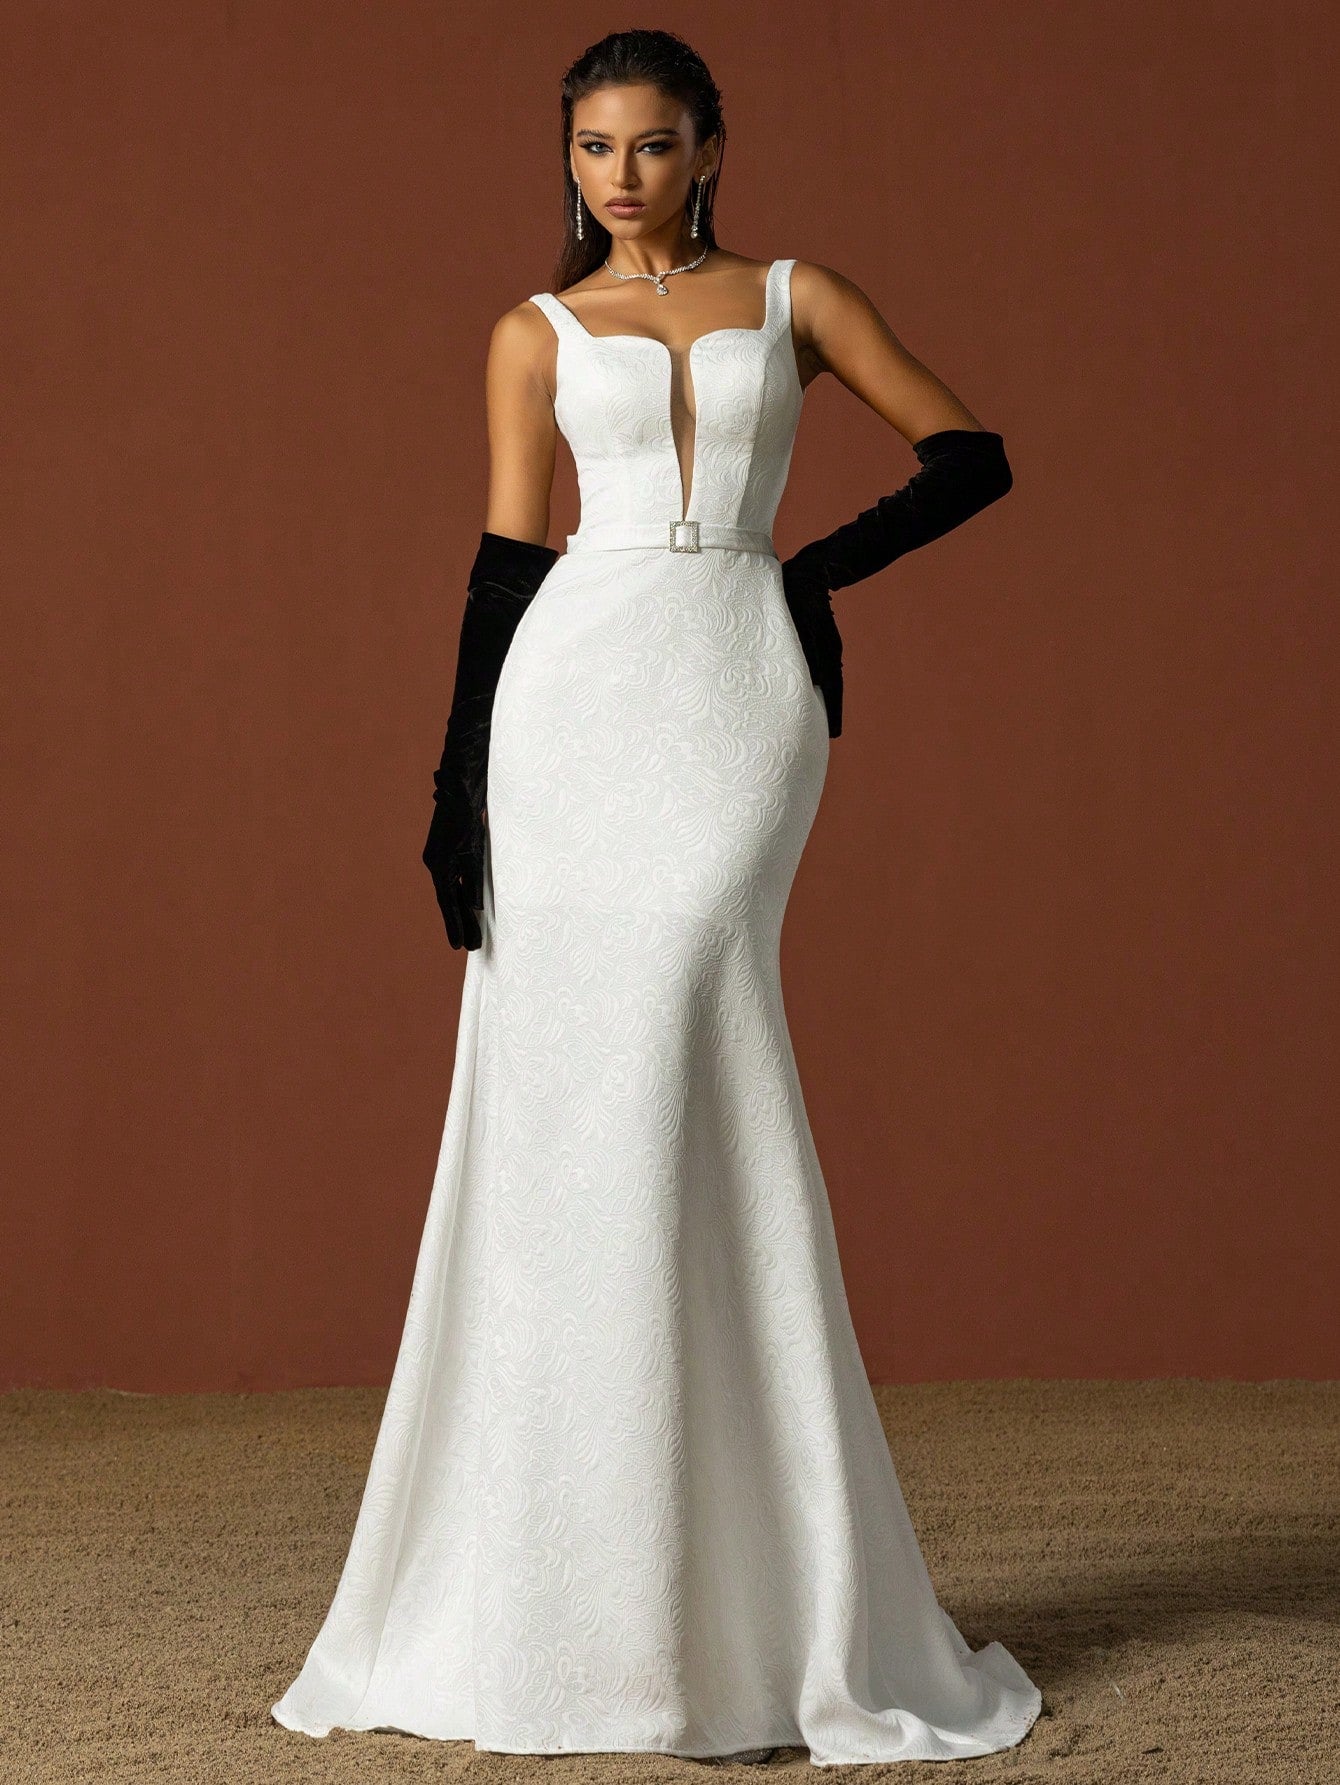 Stunning Deep V Neckline Sleeveless Low Back Wedding Dress